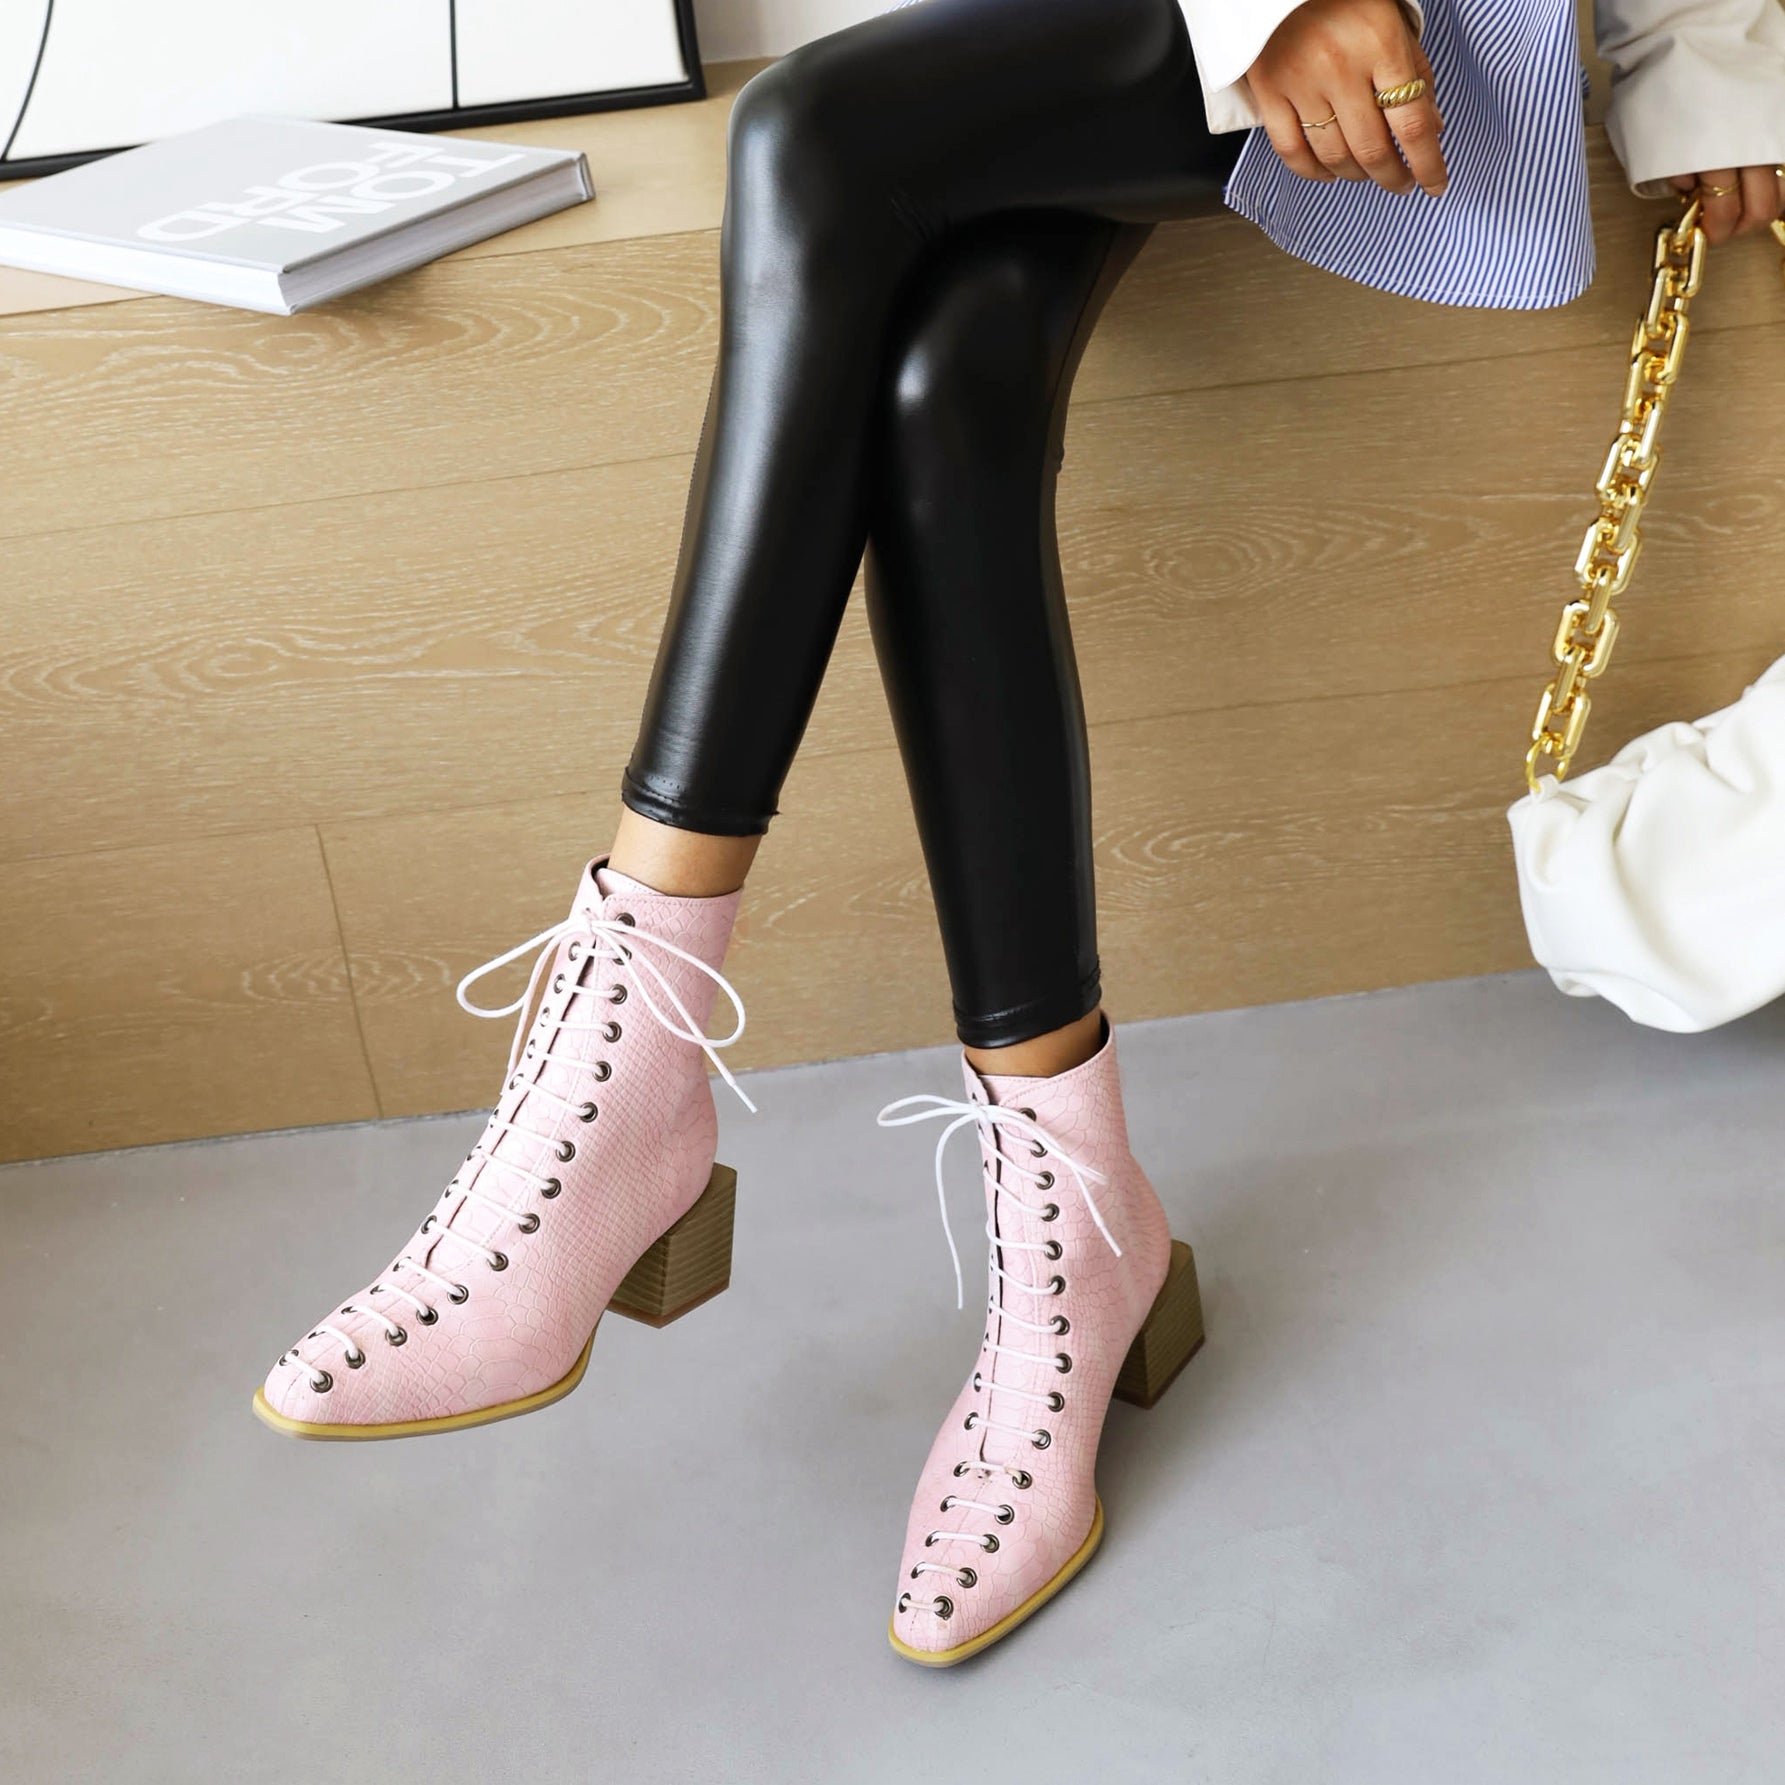 Bigsizeheels Calfskin lace-up Martin boots - Pink freeshipping - bigsizeheel®-size5-size15 -All Plus Sizes Available!